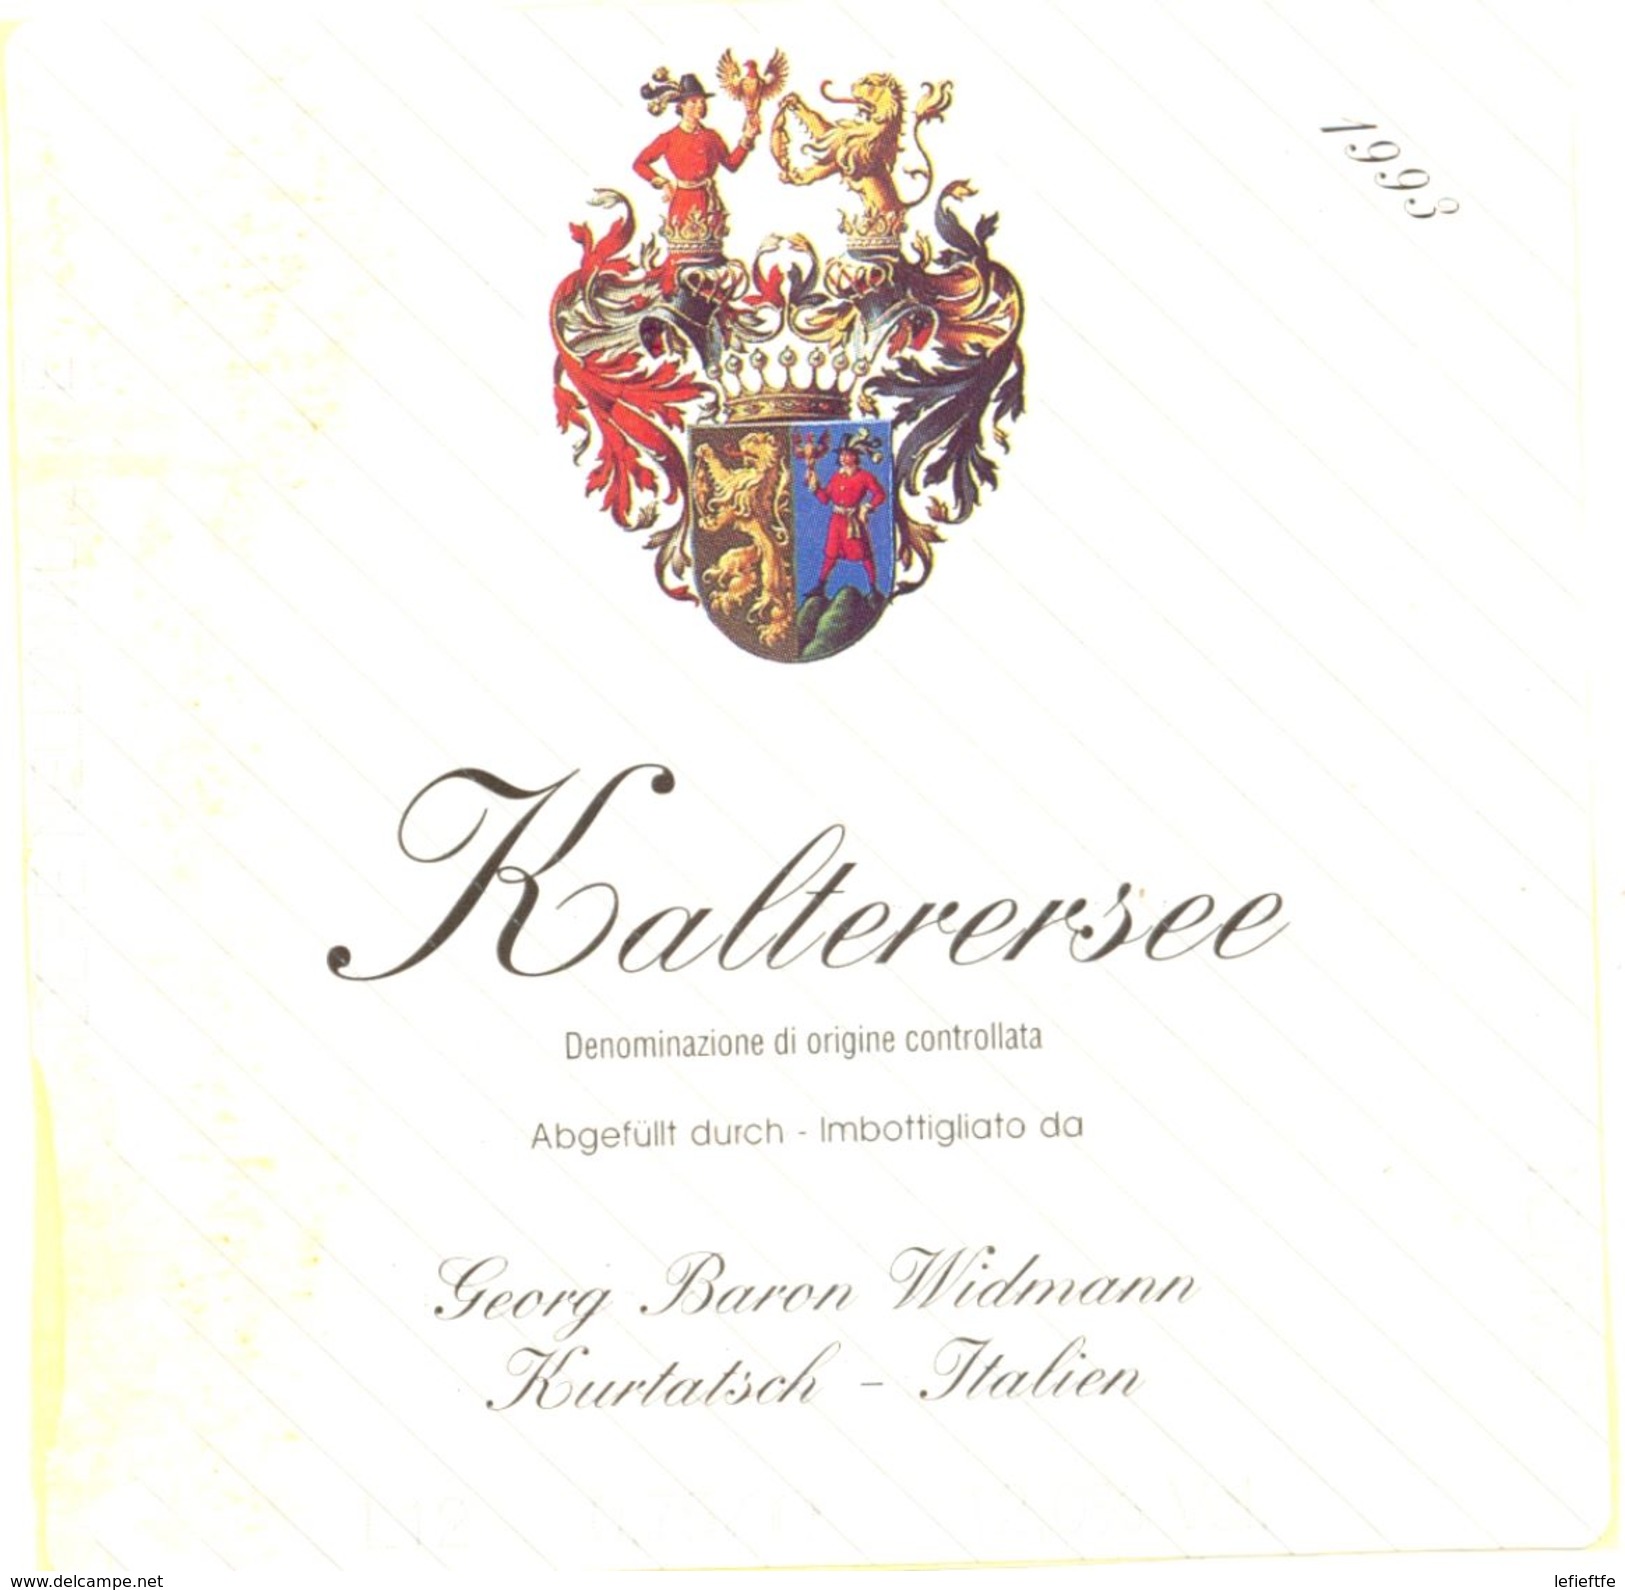 1423 - Italie - 1993 - Kalterersee - Georg Baron Widmann - Kurtatsch - Red Wines